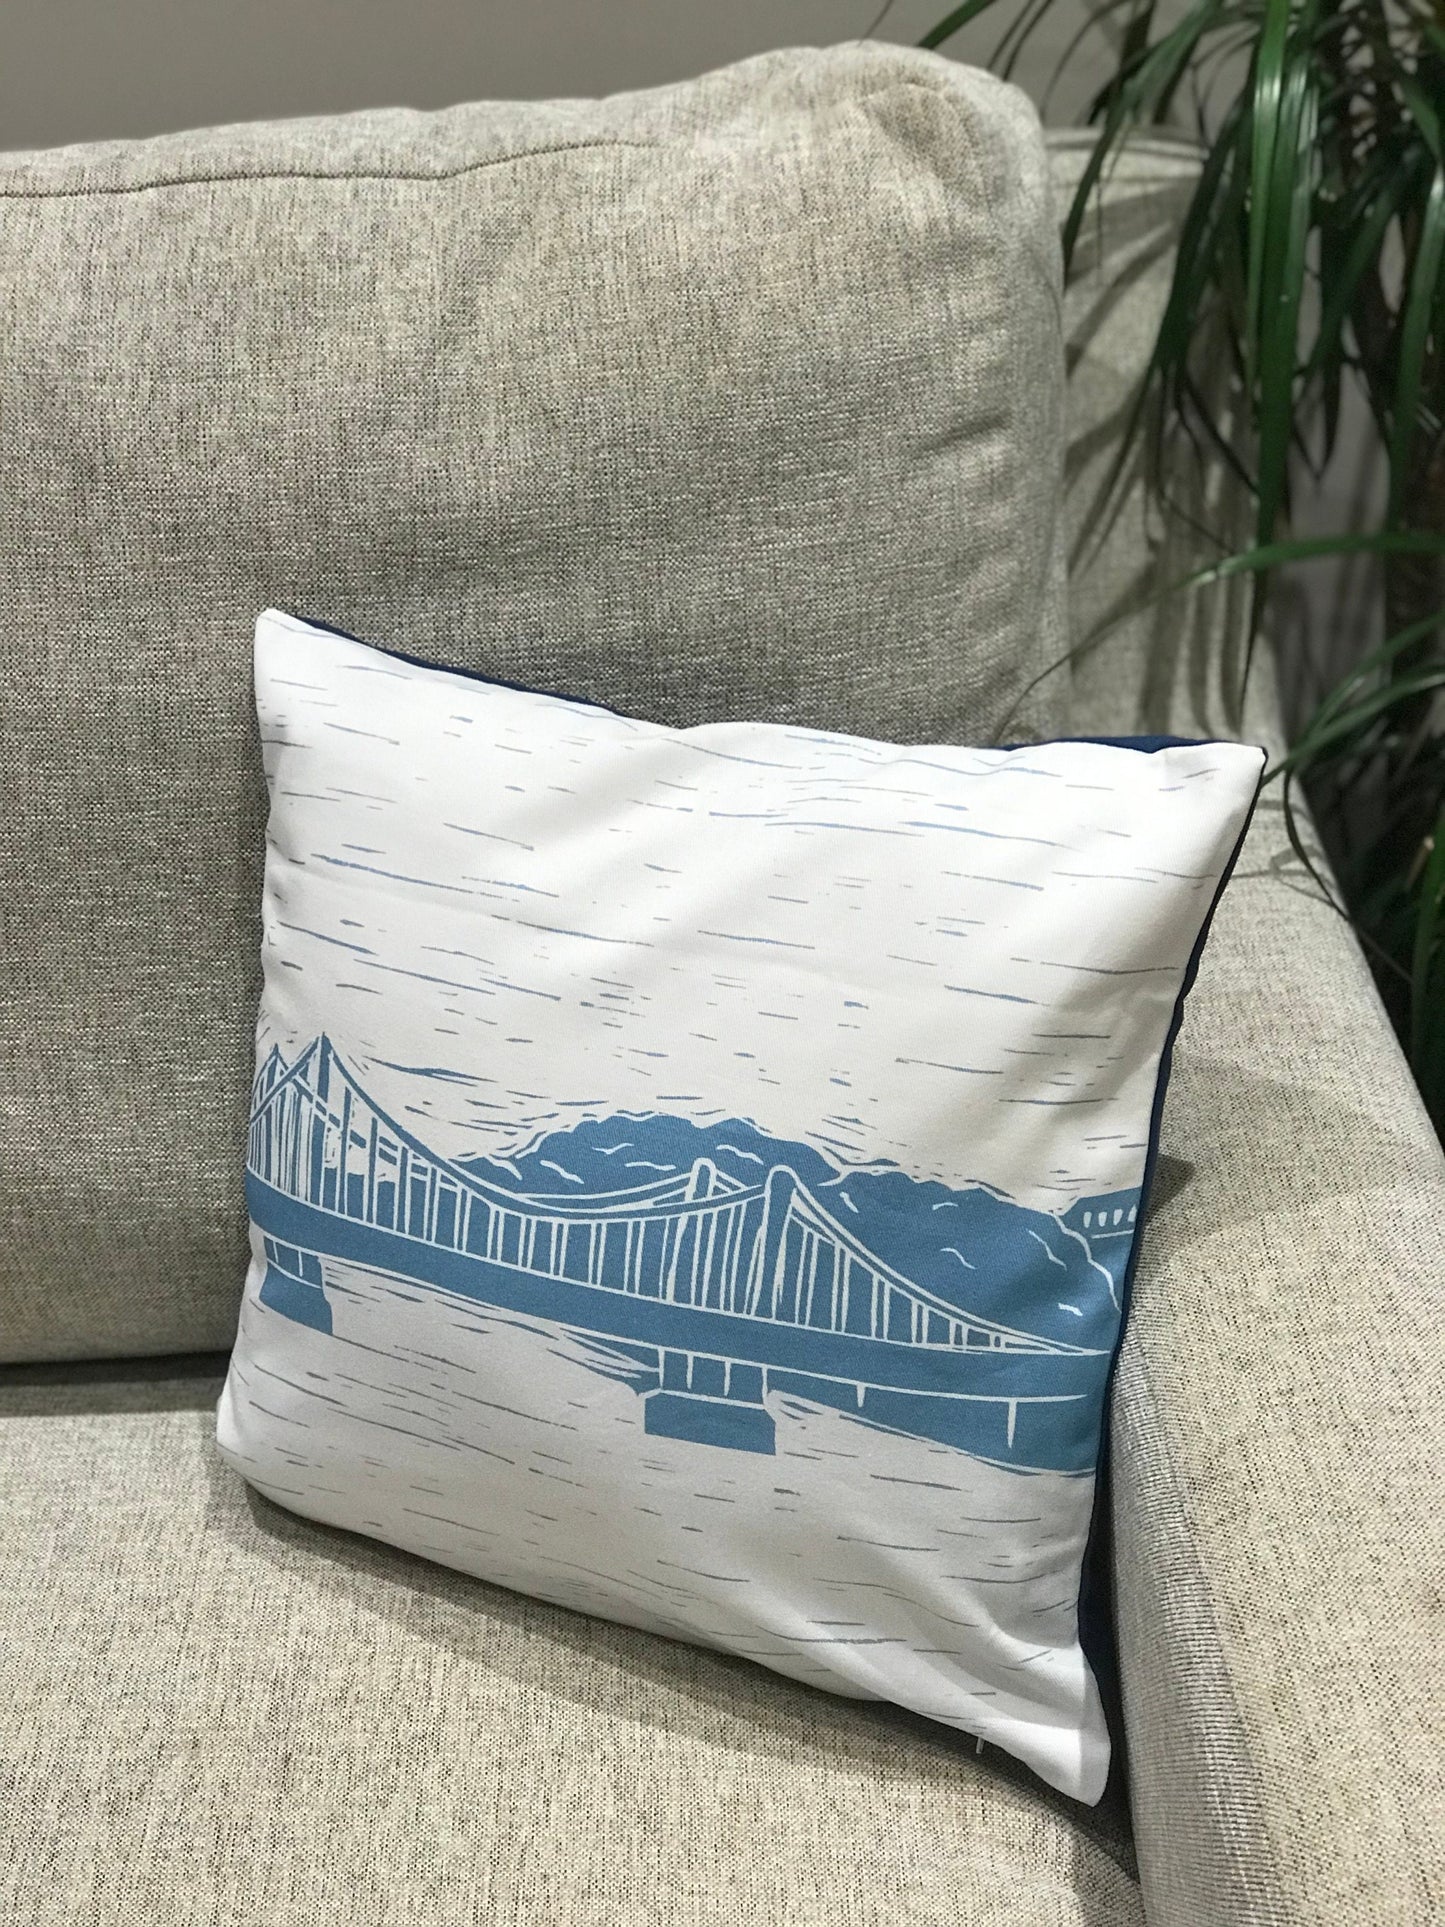 Chelsea Bridge Lino Print Cushion